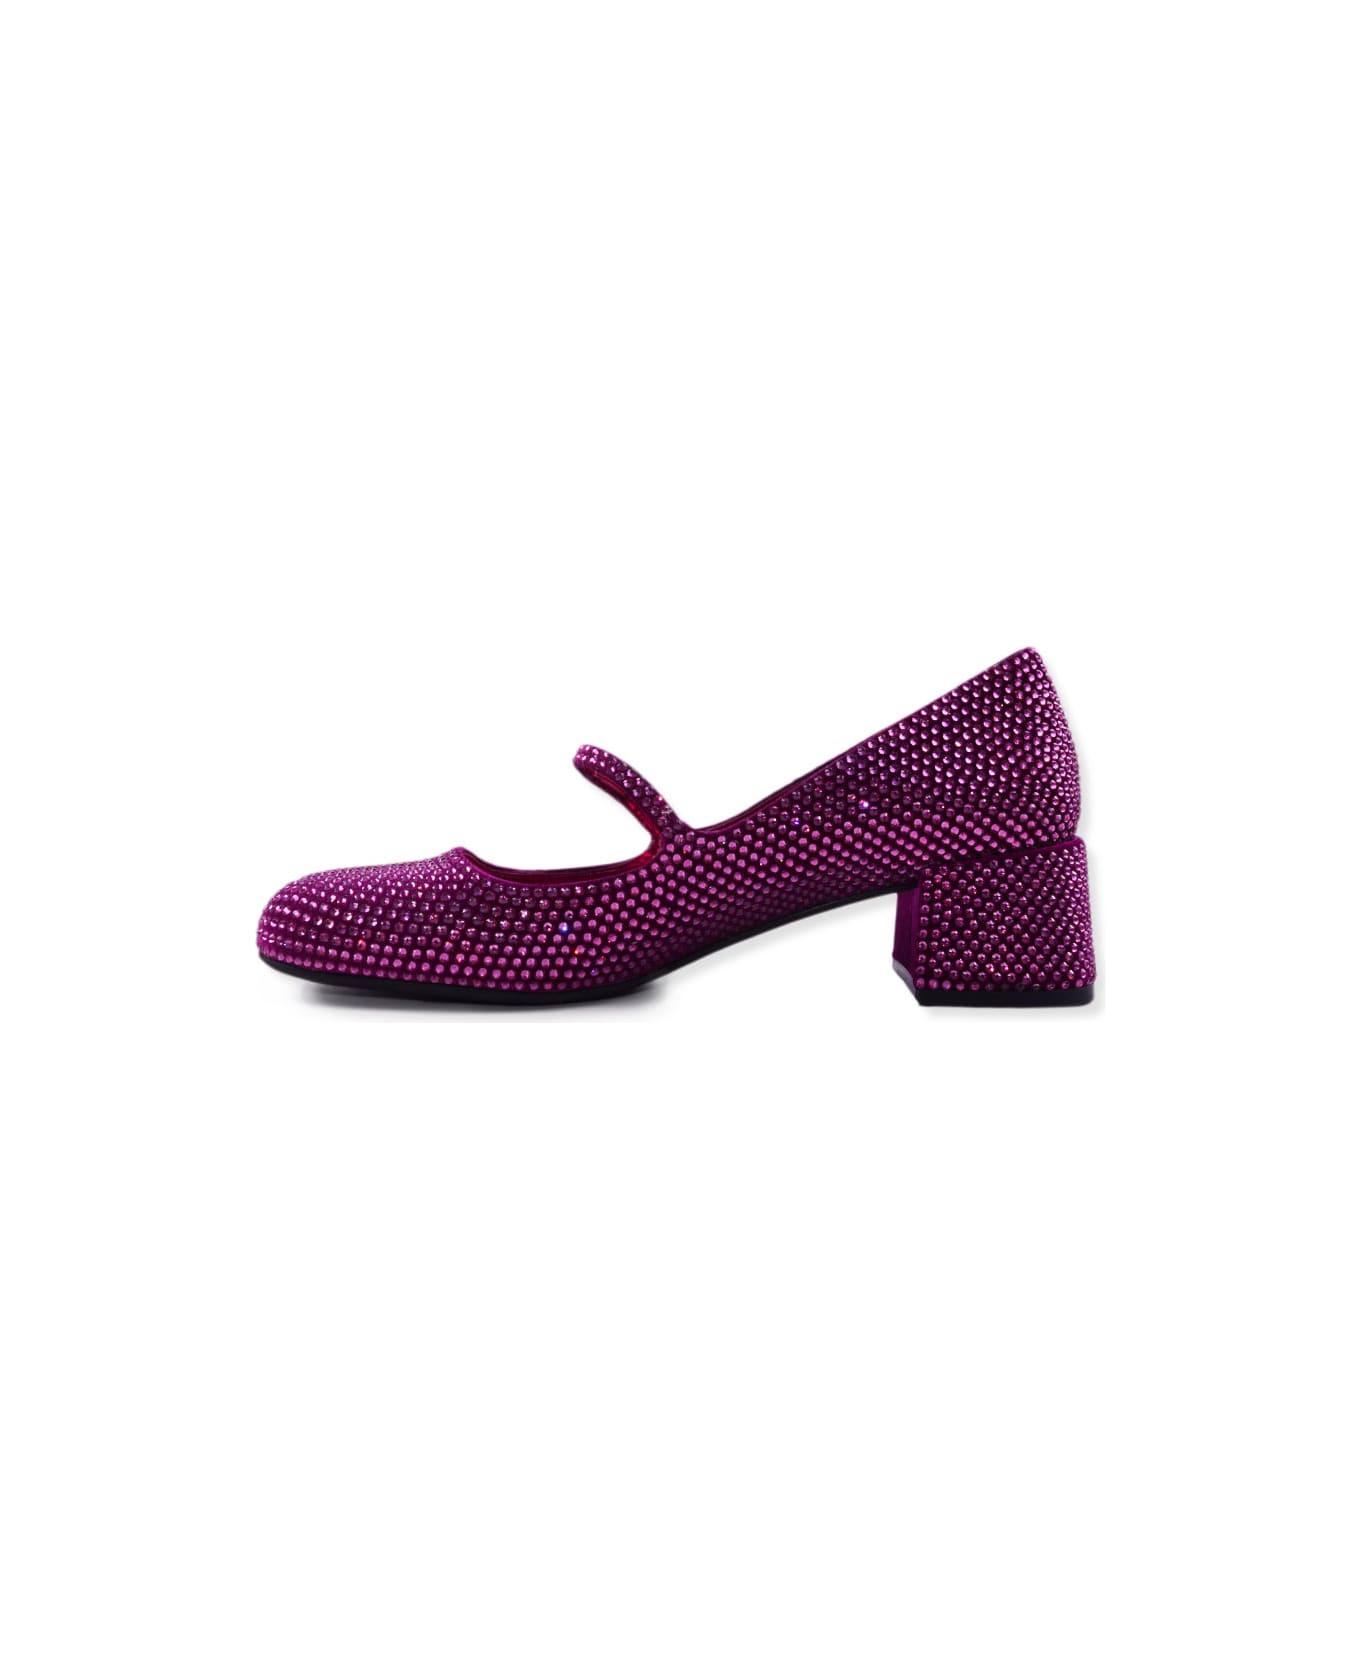 Jeffrey Campbell Shoe With Heel And Diamonds - Fuchsia